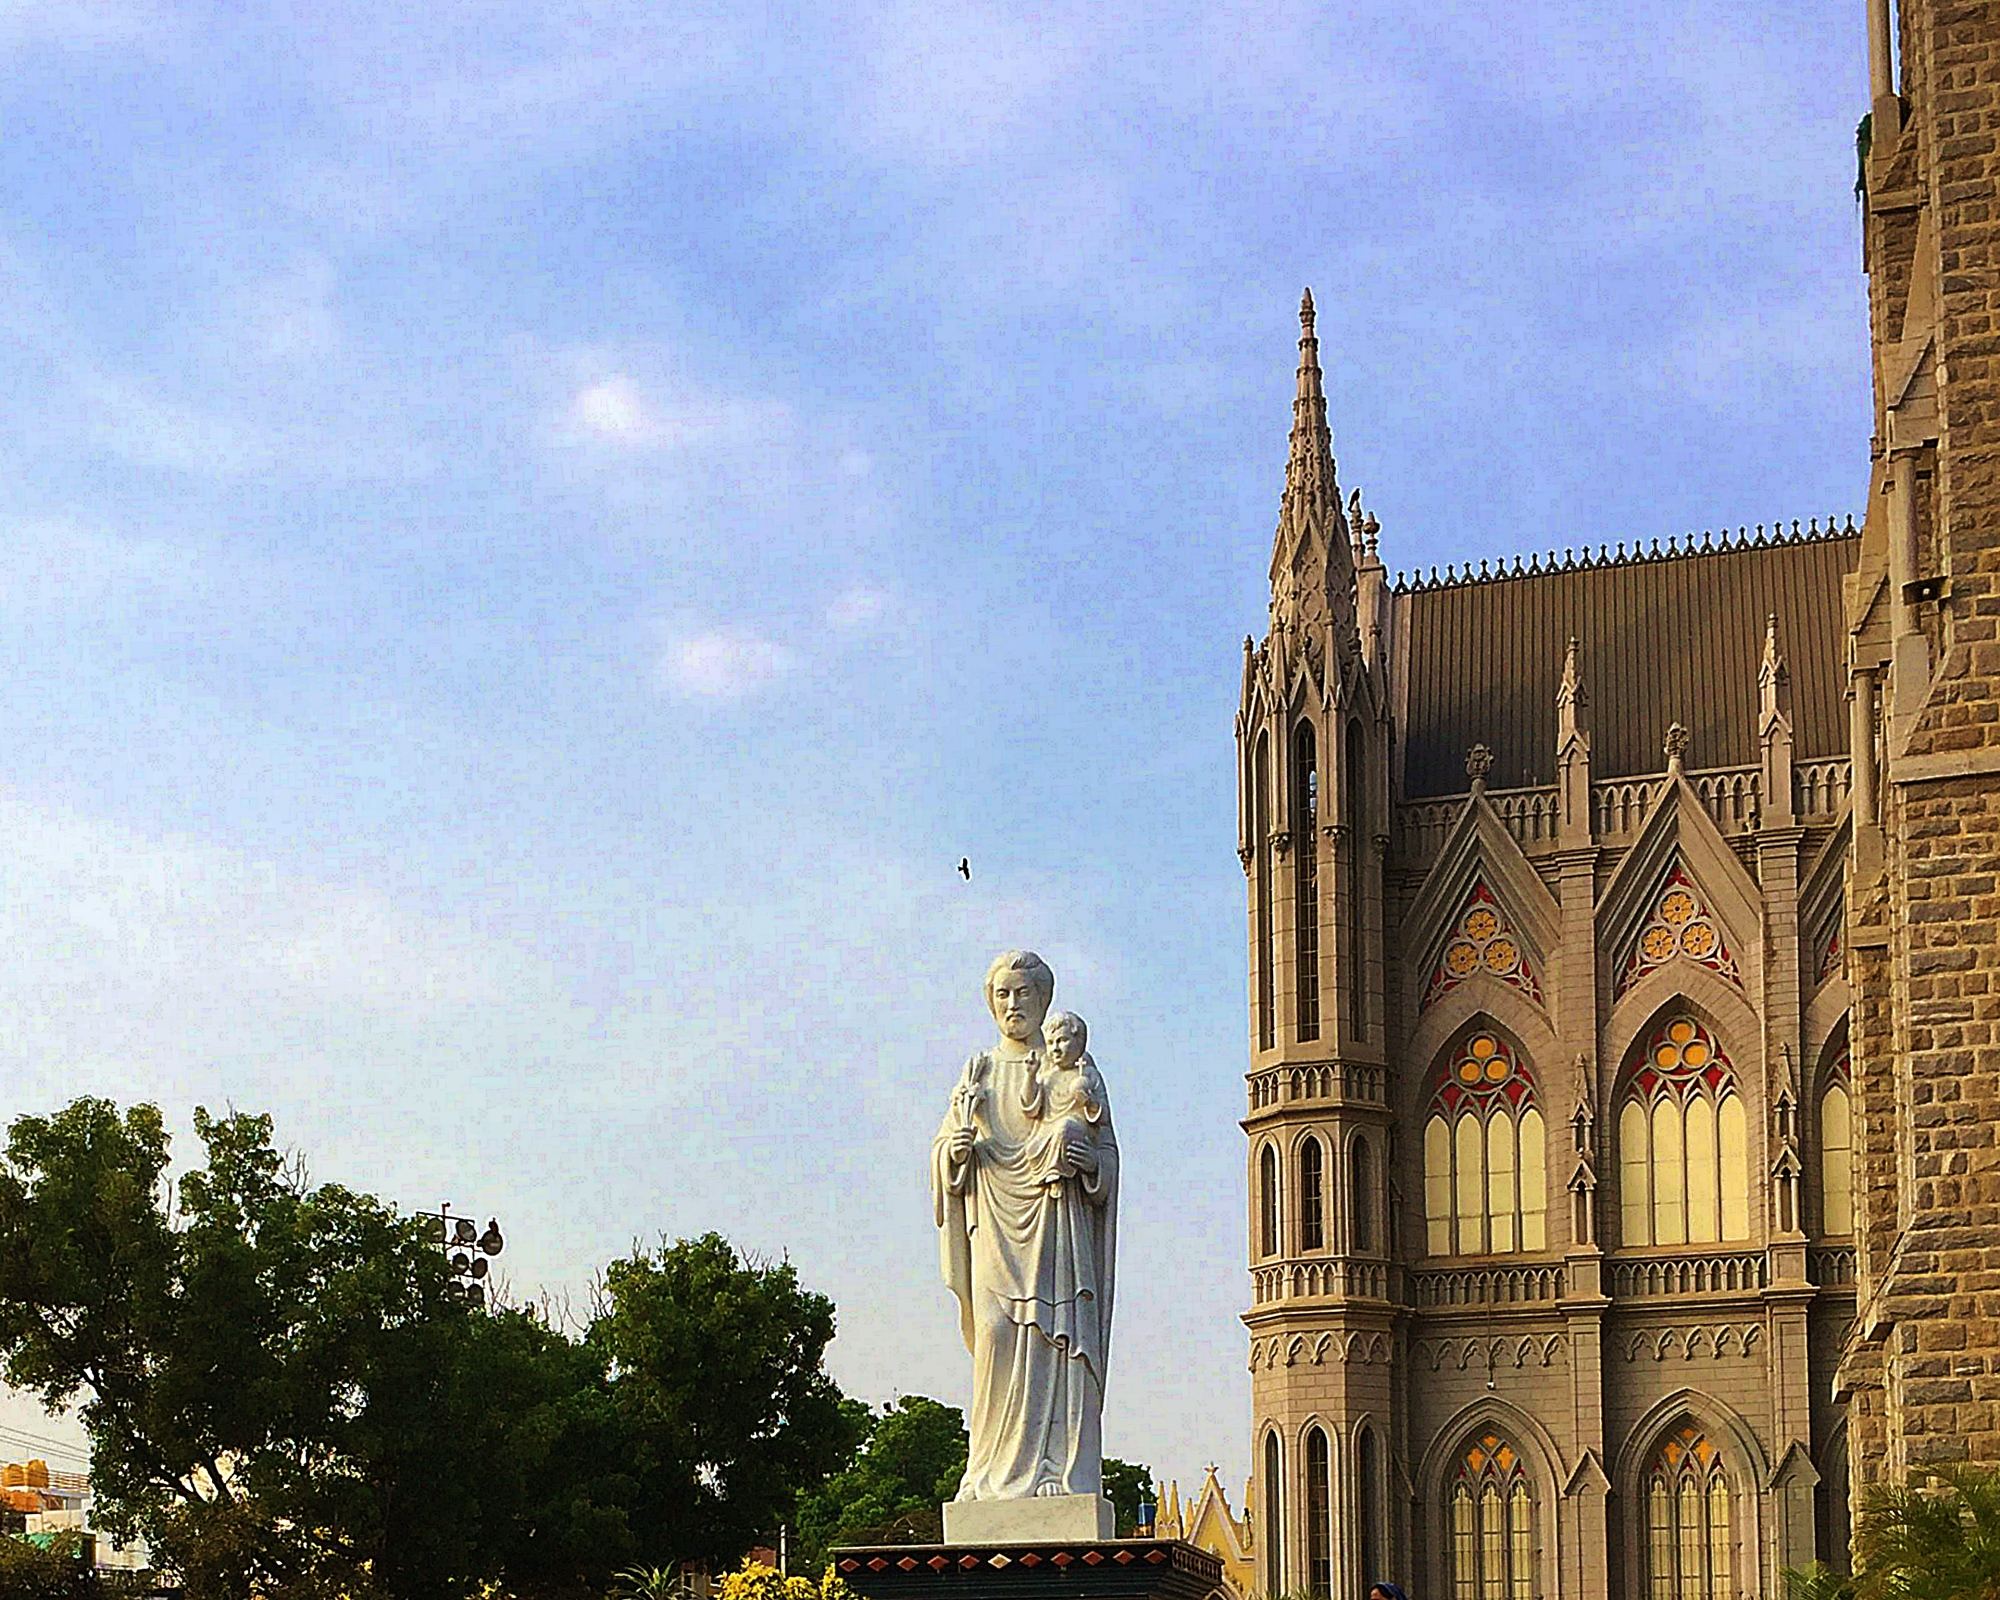 St. Philomena Church: A Gothic Cathedral in Mysore